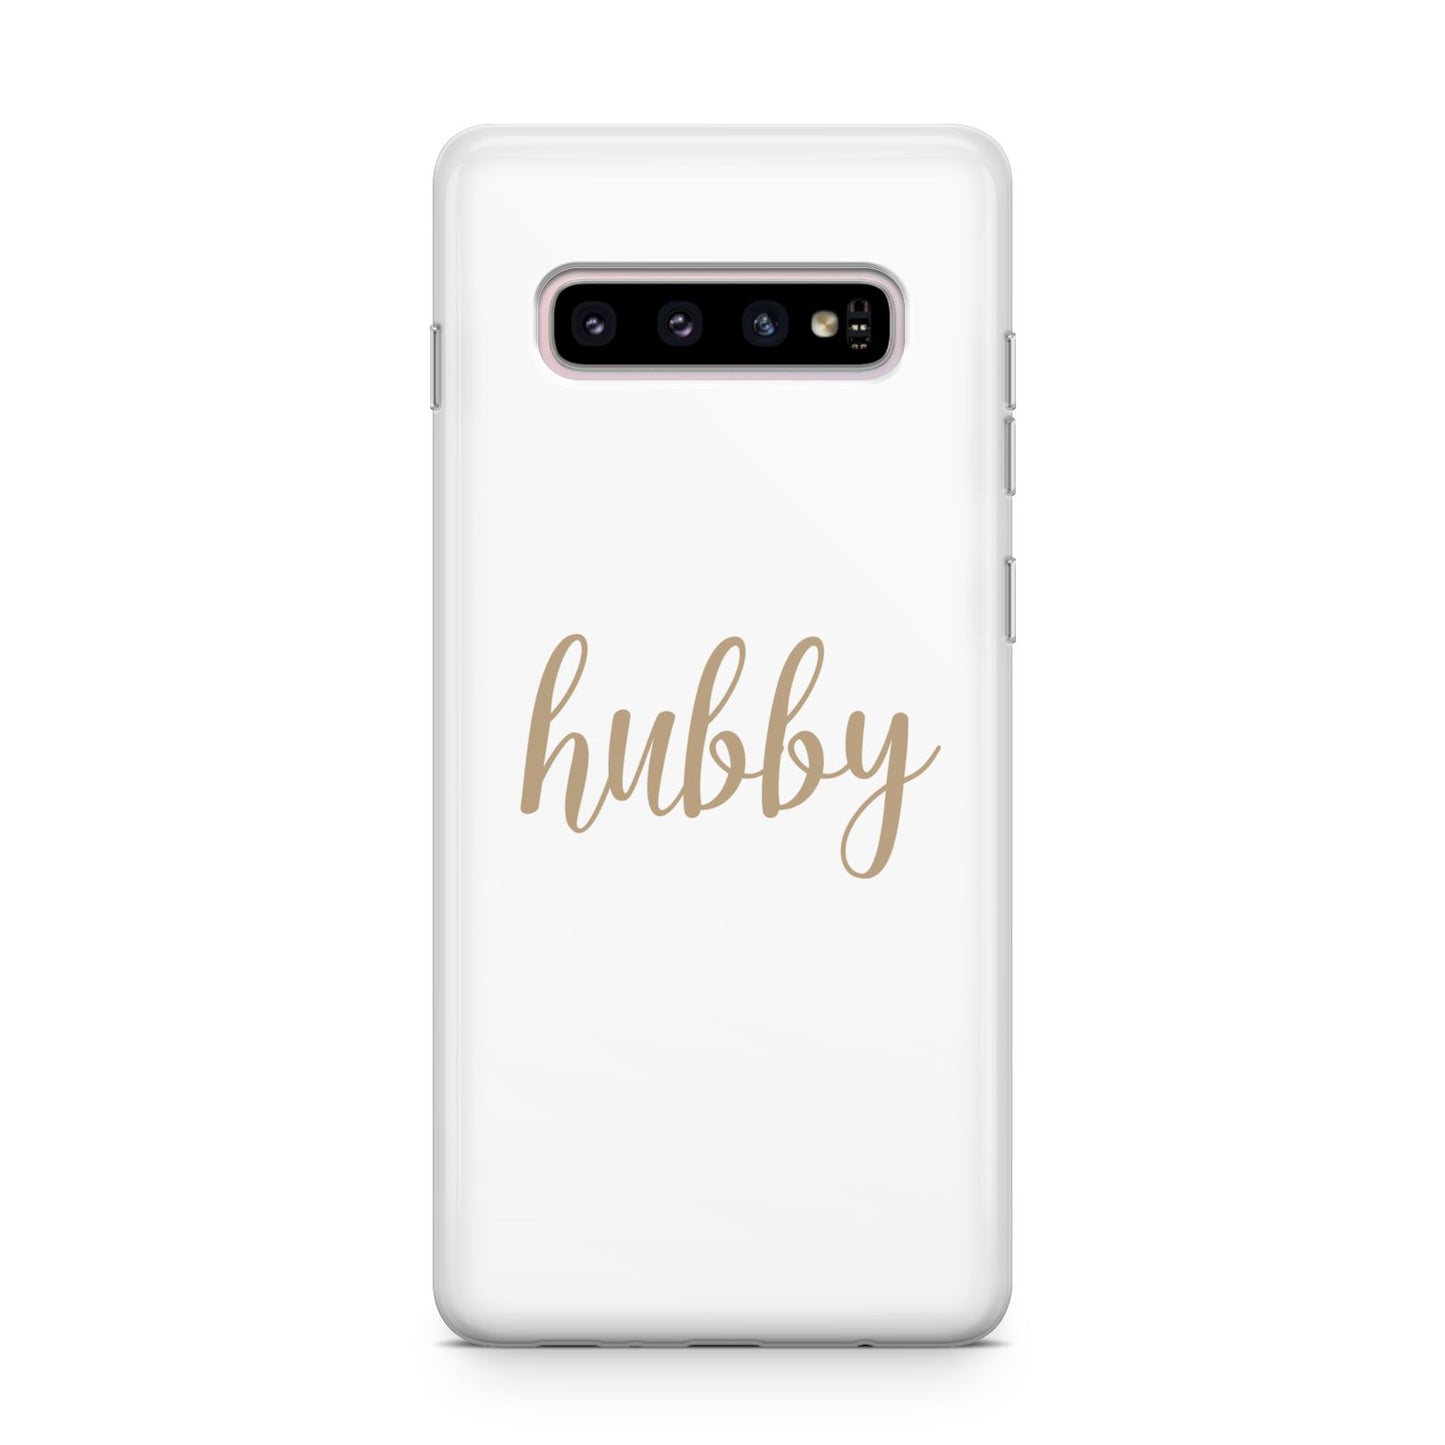 Hubby Samsung Galaxy S10 Plus Case